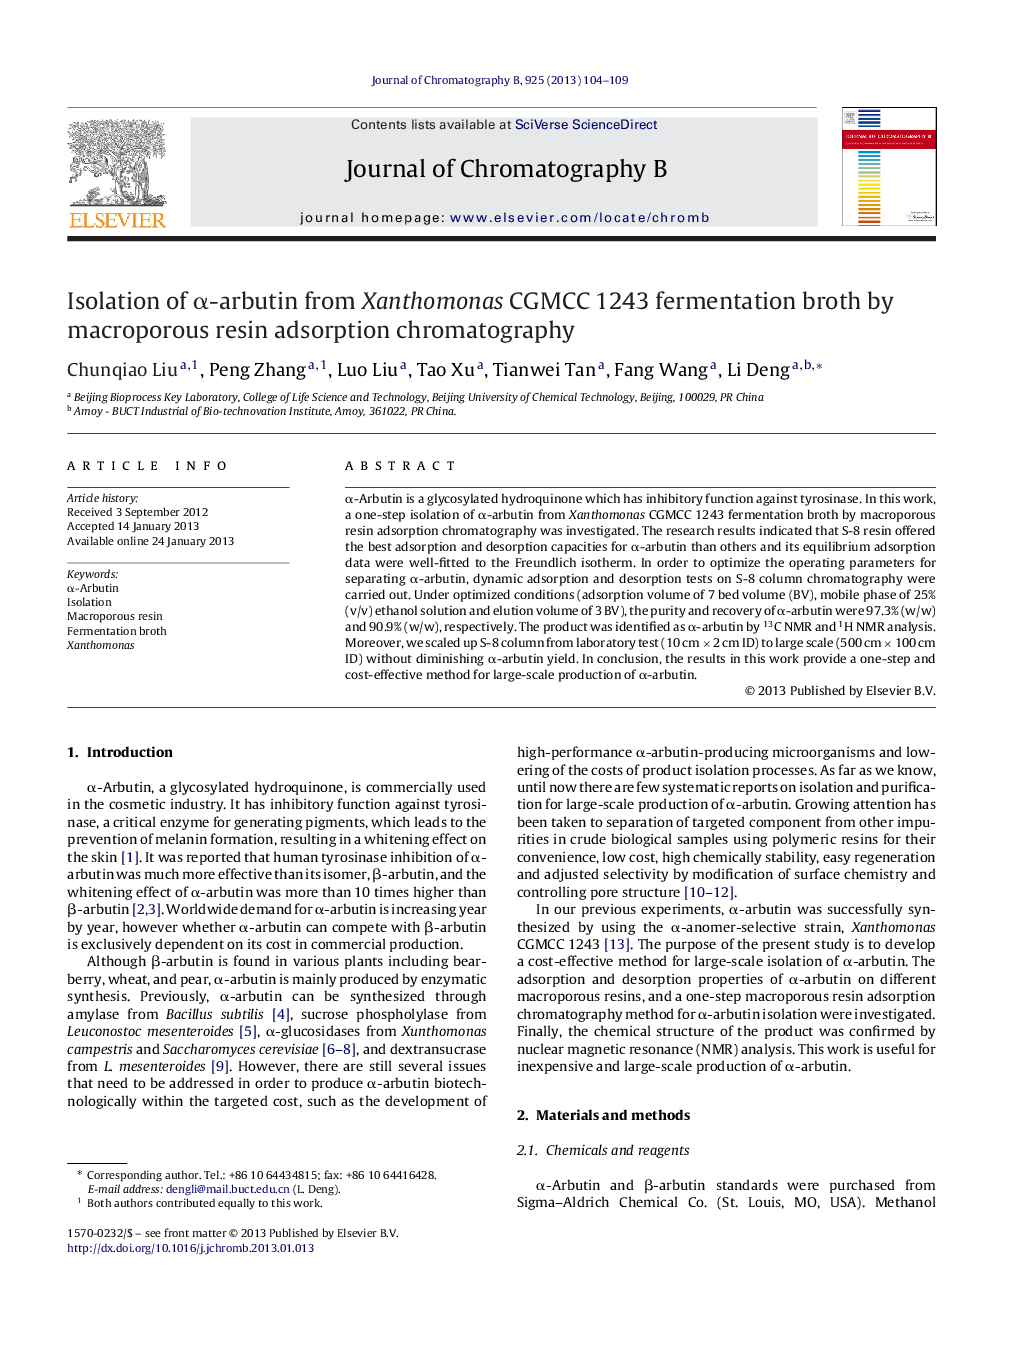 Isolation of α-arbutin from Xanthomonas CGMCC 1243 fermentation broth by macroporous resin adsorption chromatography